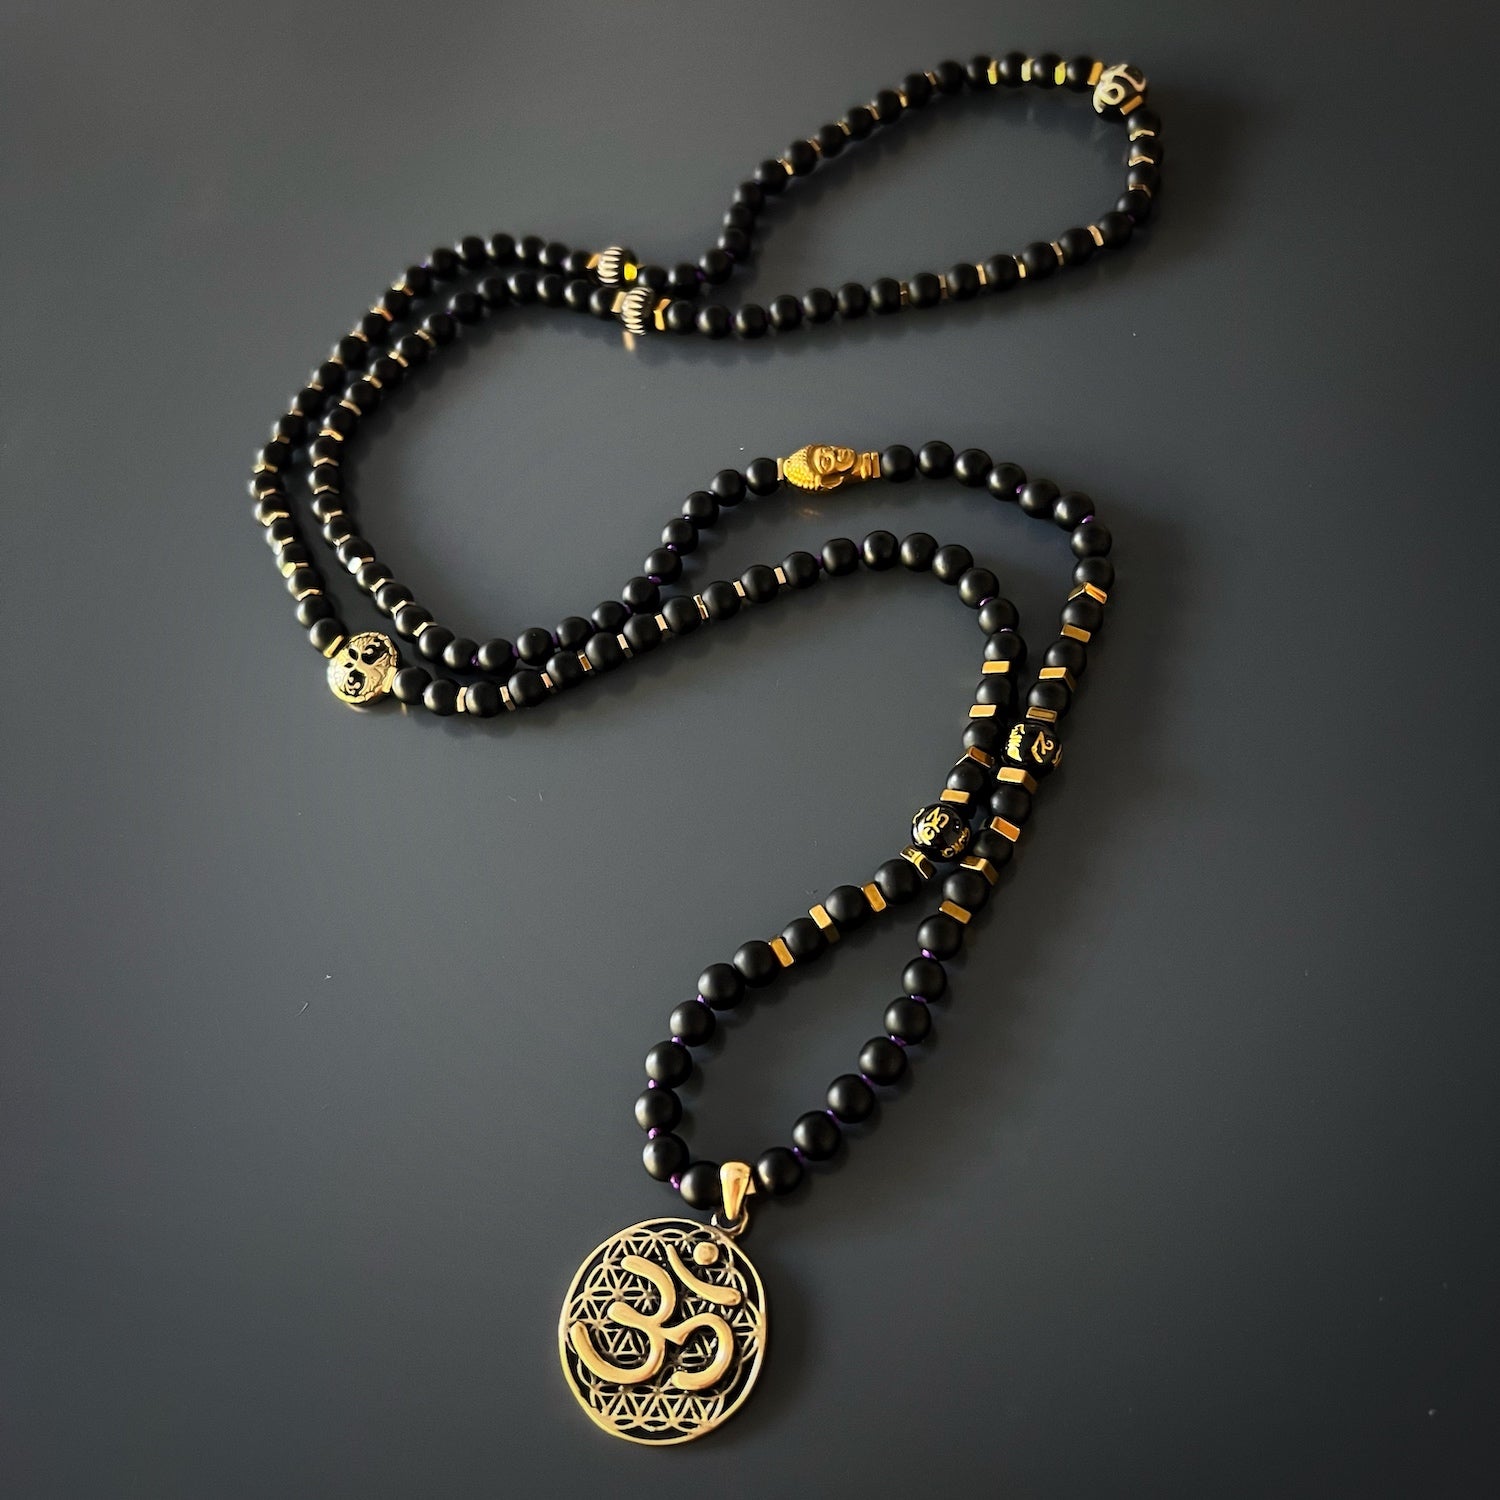 The Spiritual Yoga Mala Onyx Necklace, radiating a sense of spirituality